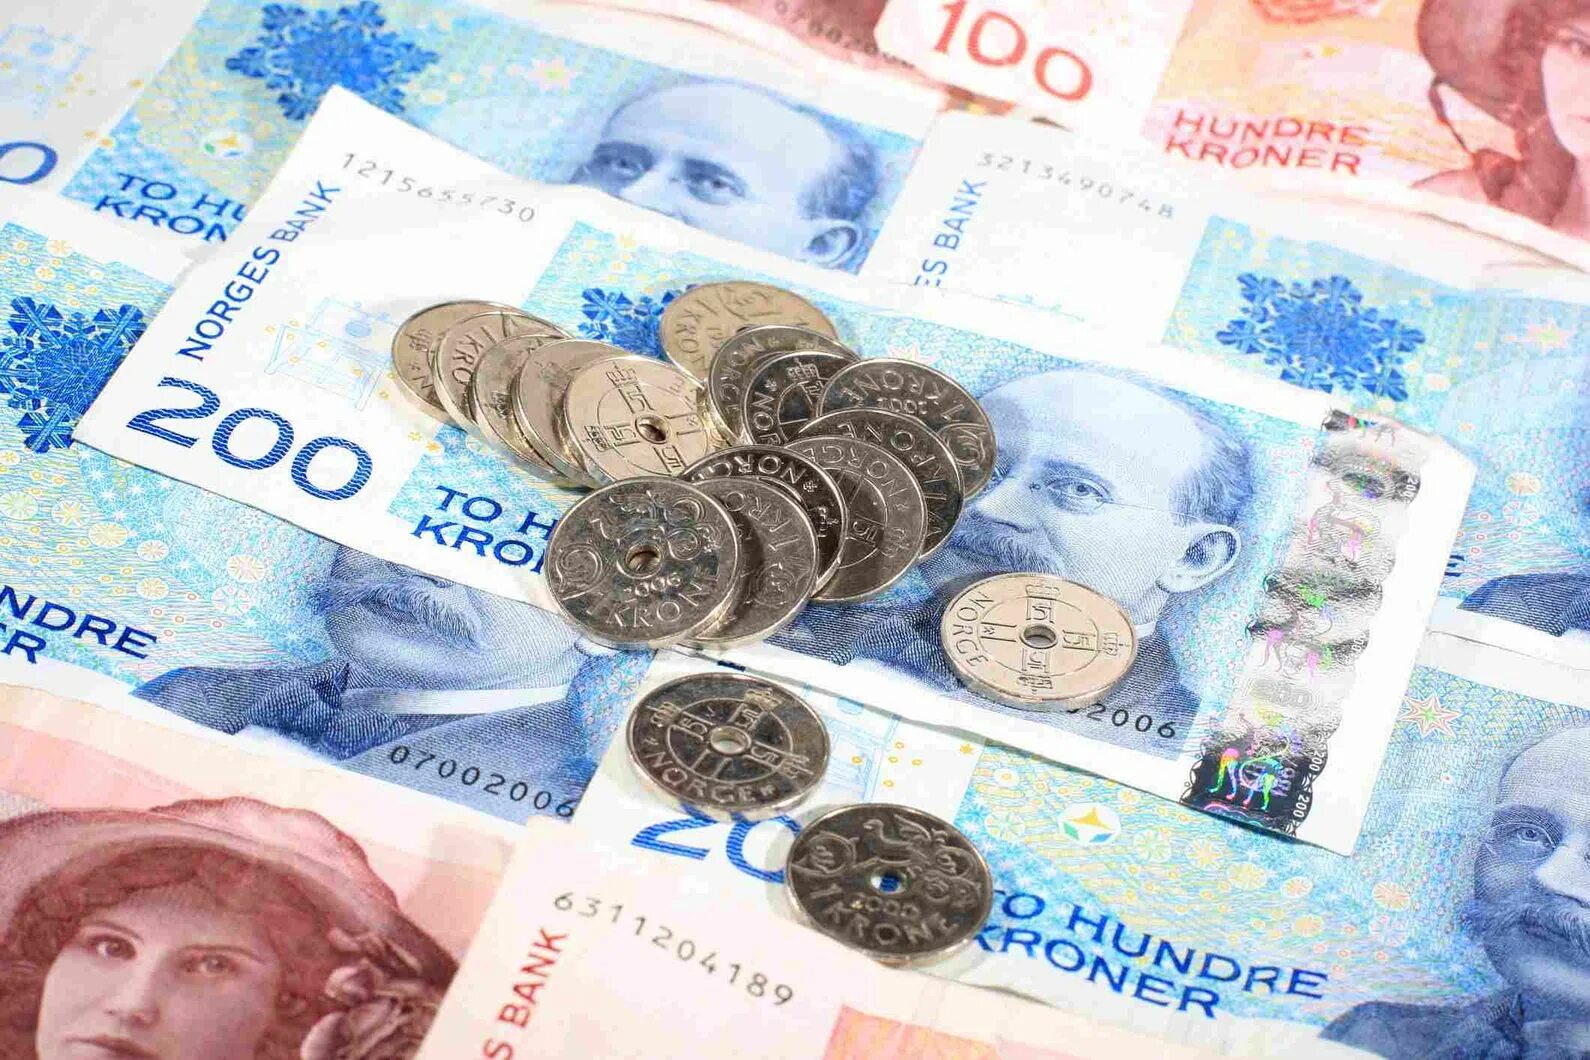 Шведская денежная единица. Норвежская крона. Норвежская крона банкноты и монеты. Национальная валюта Норвегии. Денежная единица Норвегии.